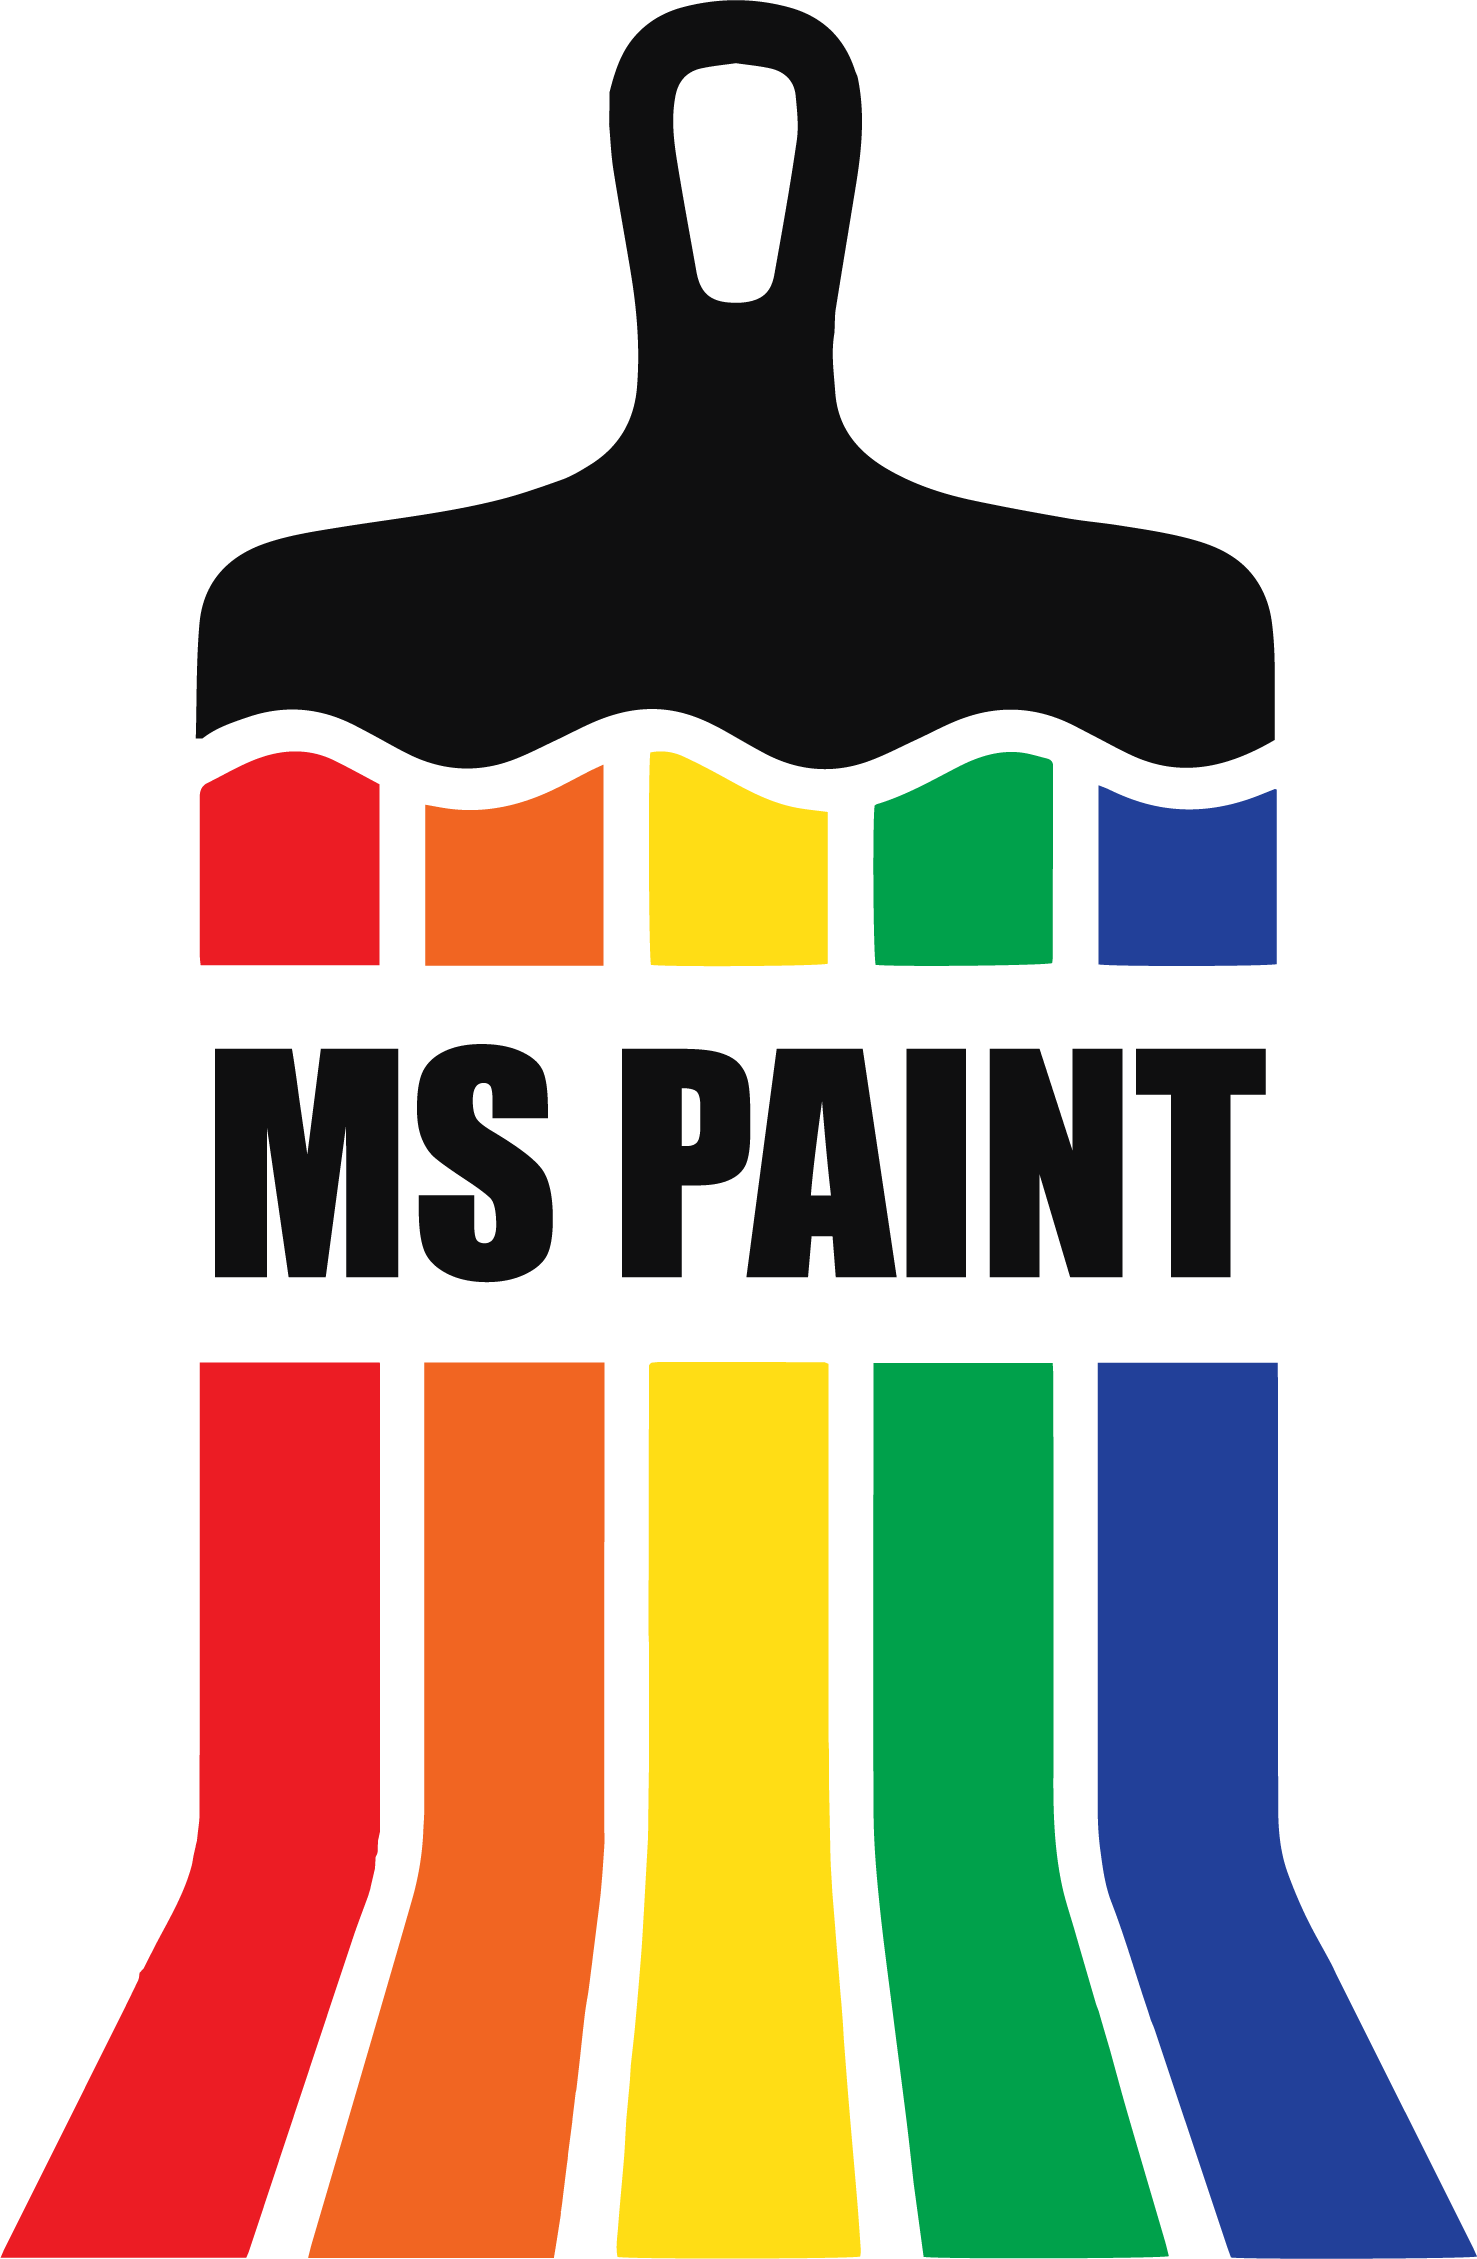 mspaint logo